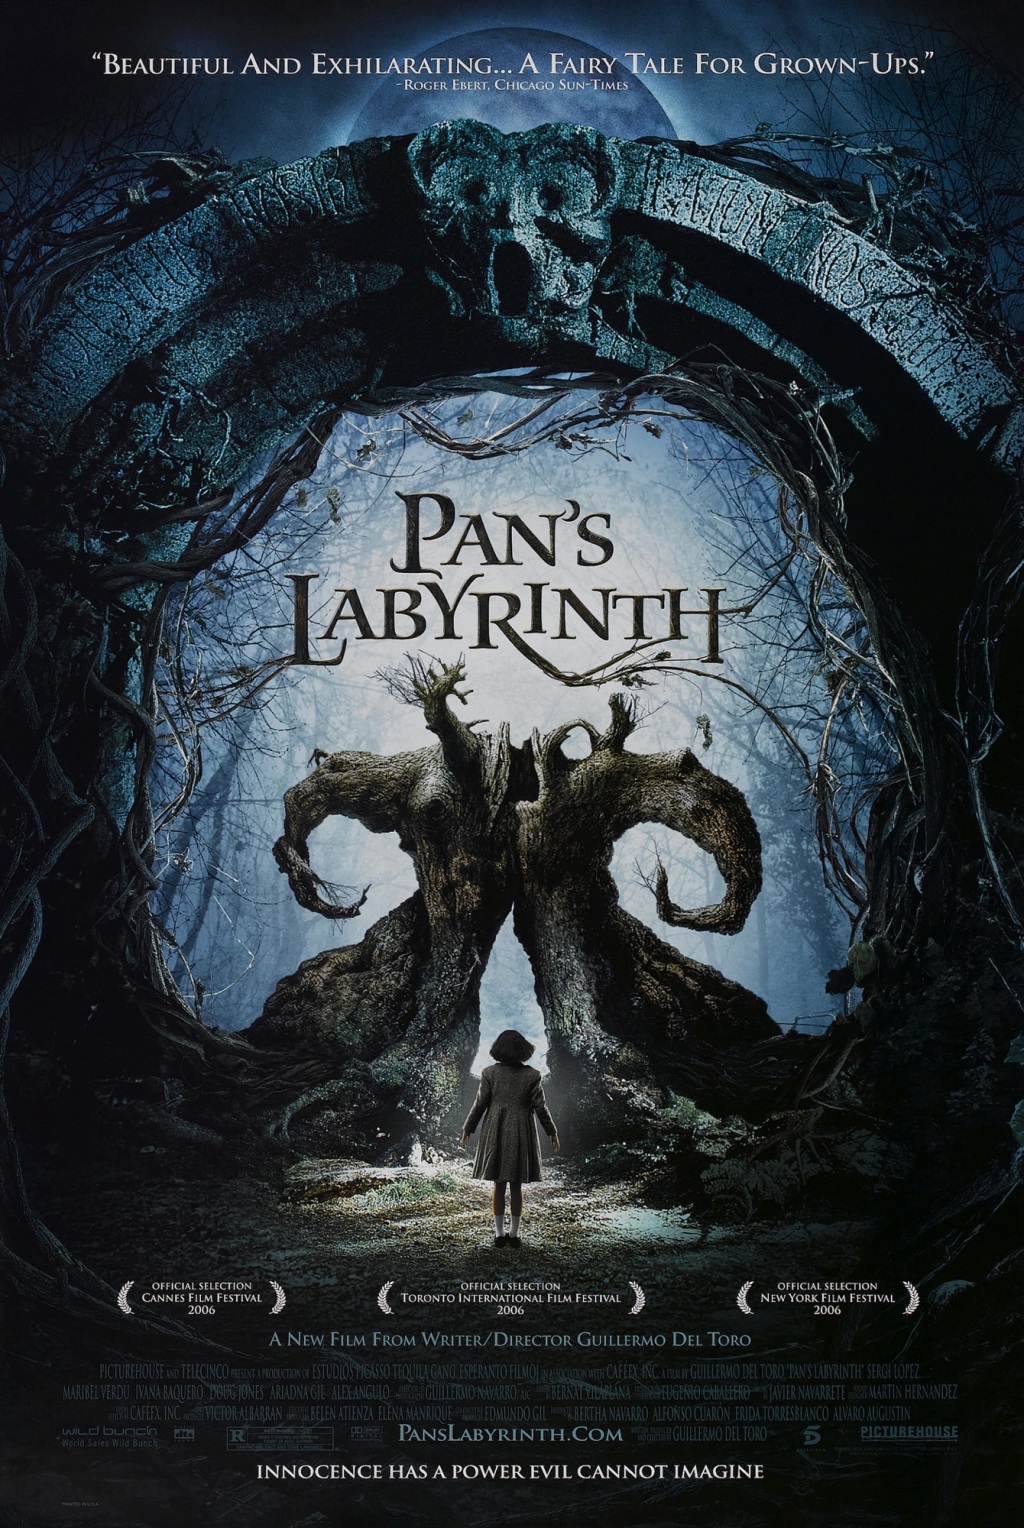 PAN’S LABYRINTH